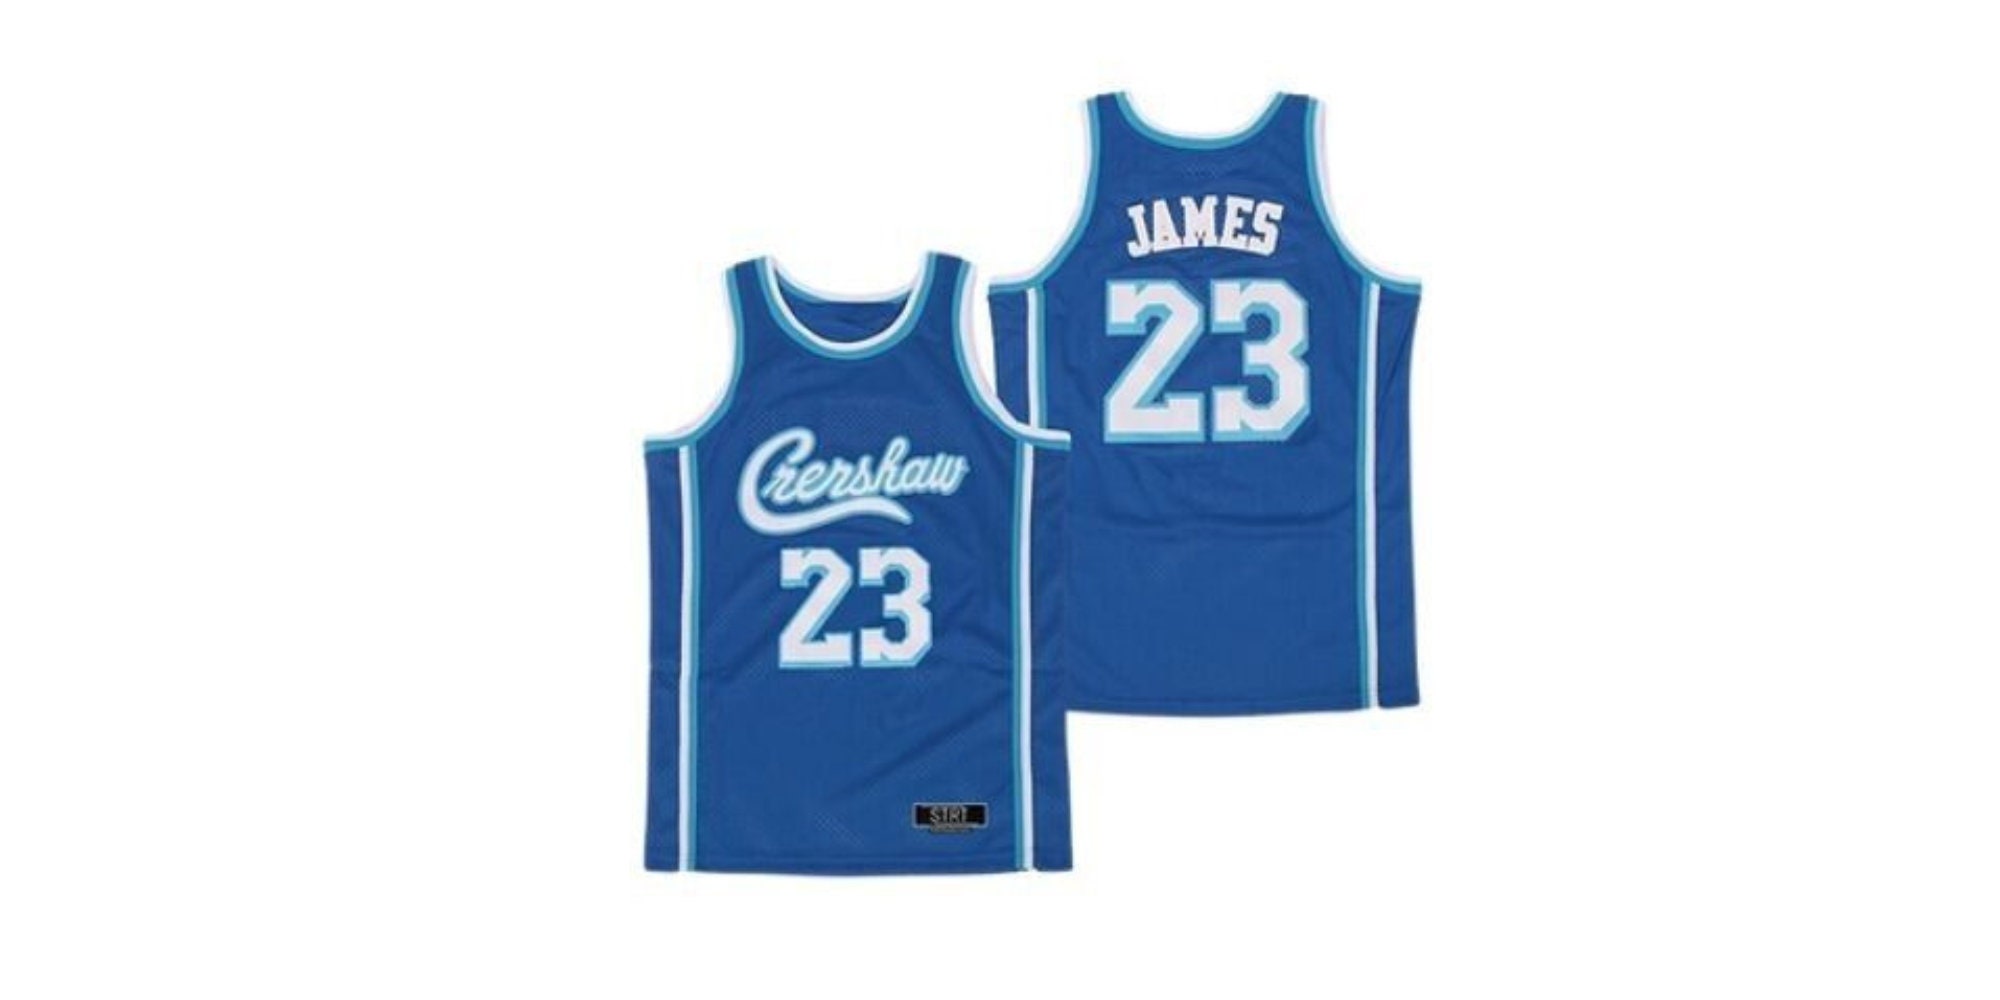 Lebron James #23 Crenshaw Lakers Headgear Classics NBA Basketball jersey  SZ-XL